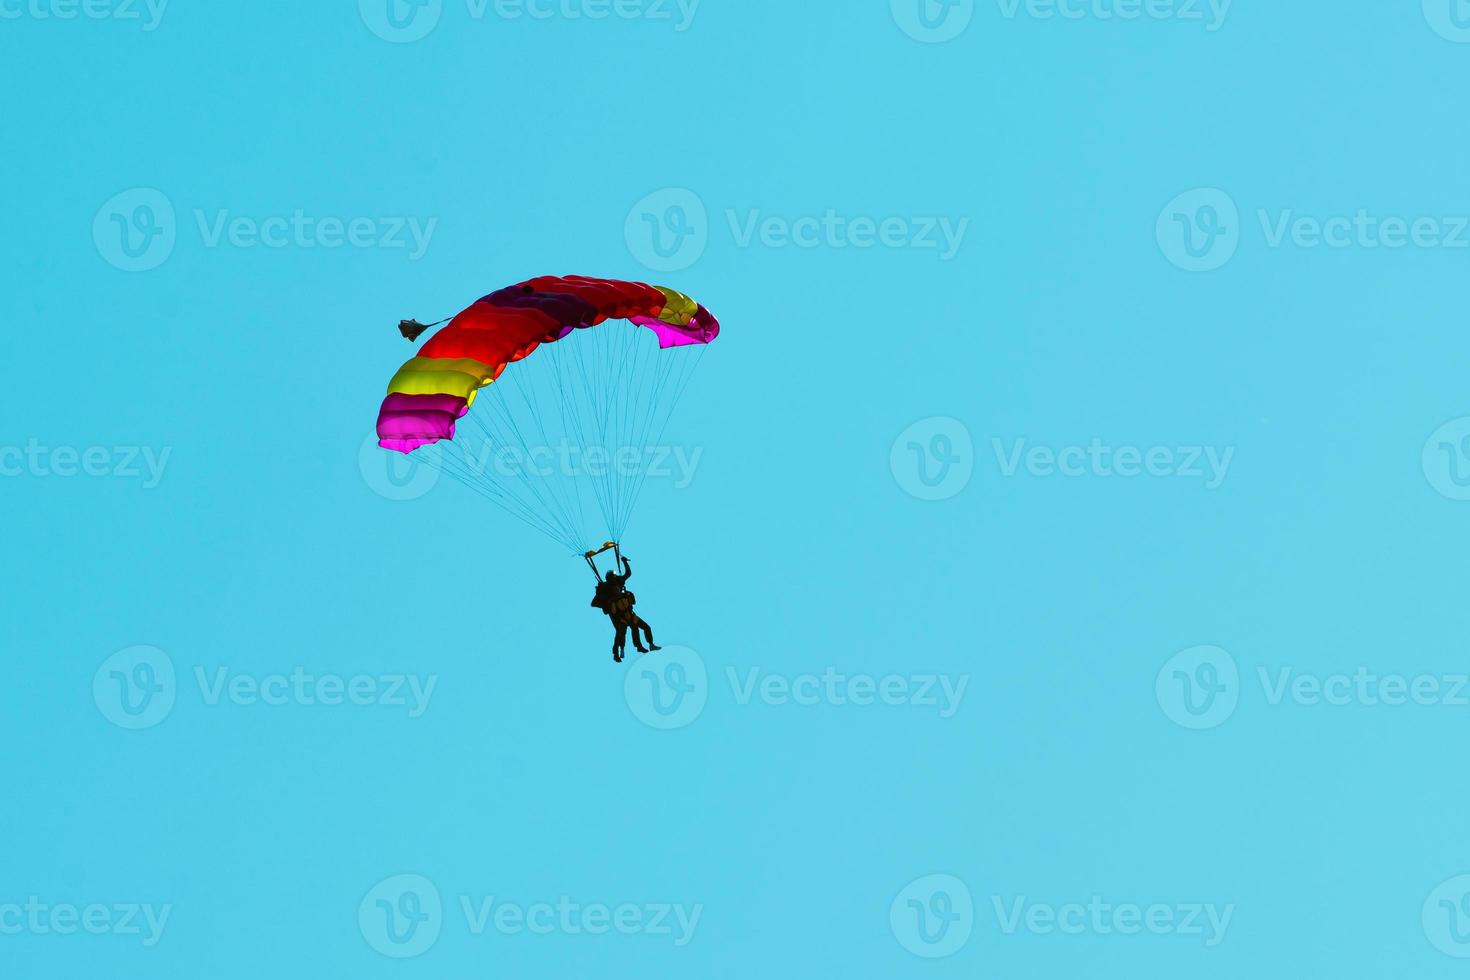 lancio con paracadute in tandem. sagoma di paracadutista che vola nel cielo blu chiaro. foto